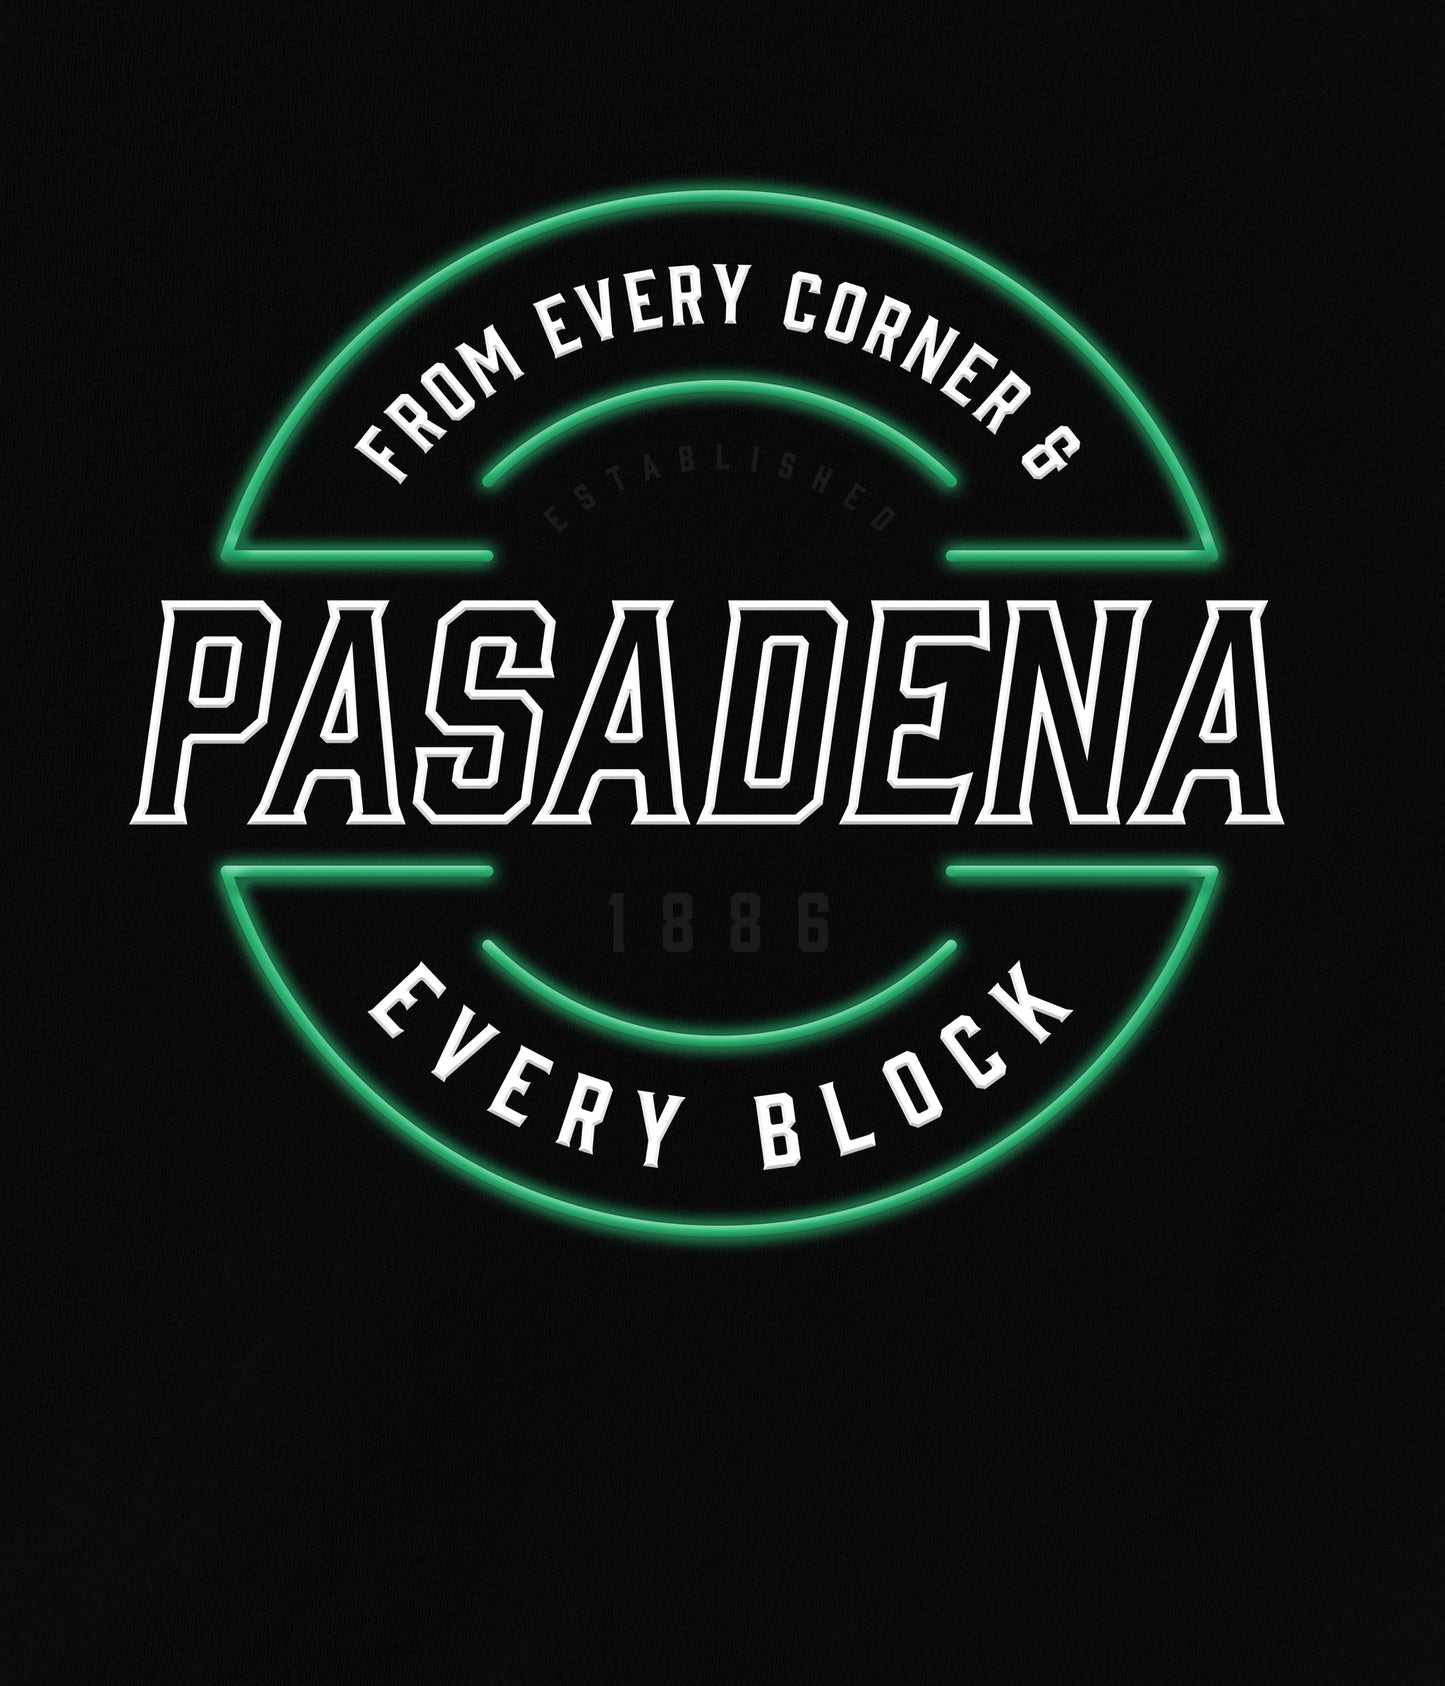 Pasadena Lit Up Crewneck Sweatshirt